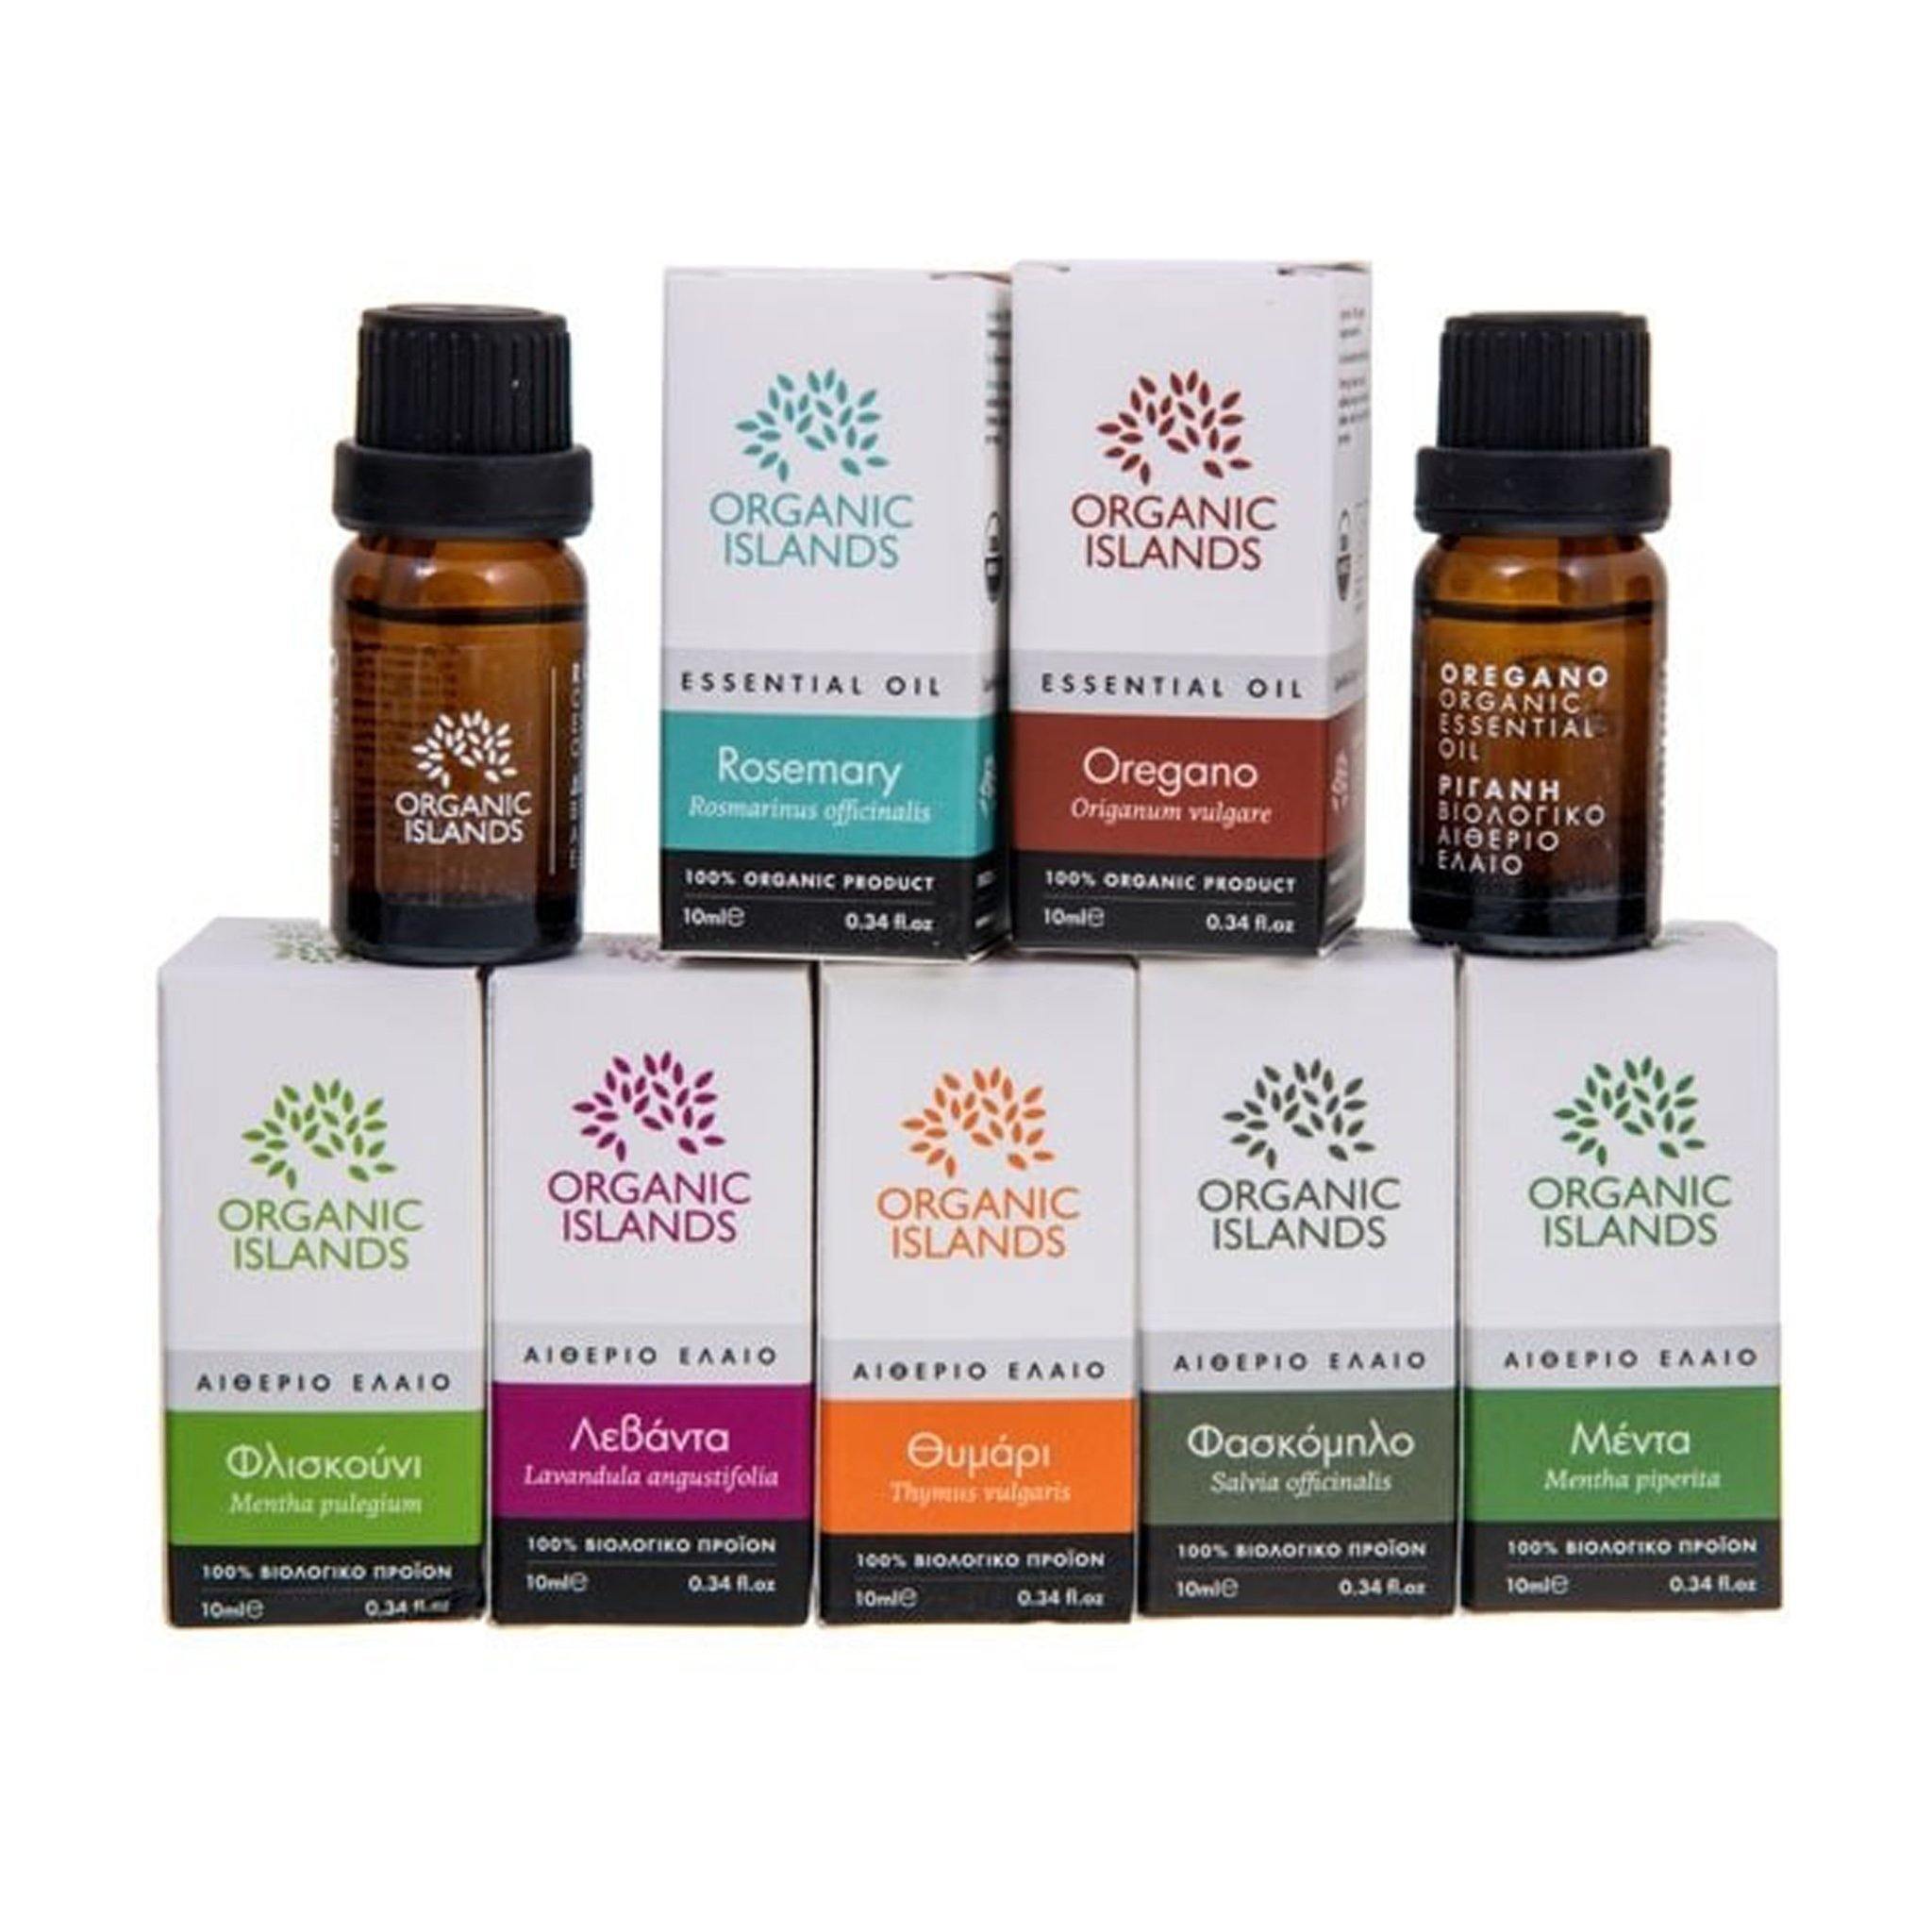 Organic Lavender Essential Oil 10ml, 100% Pure, Relaxation & Stress Relief  - Rejuvenation Therapeutics